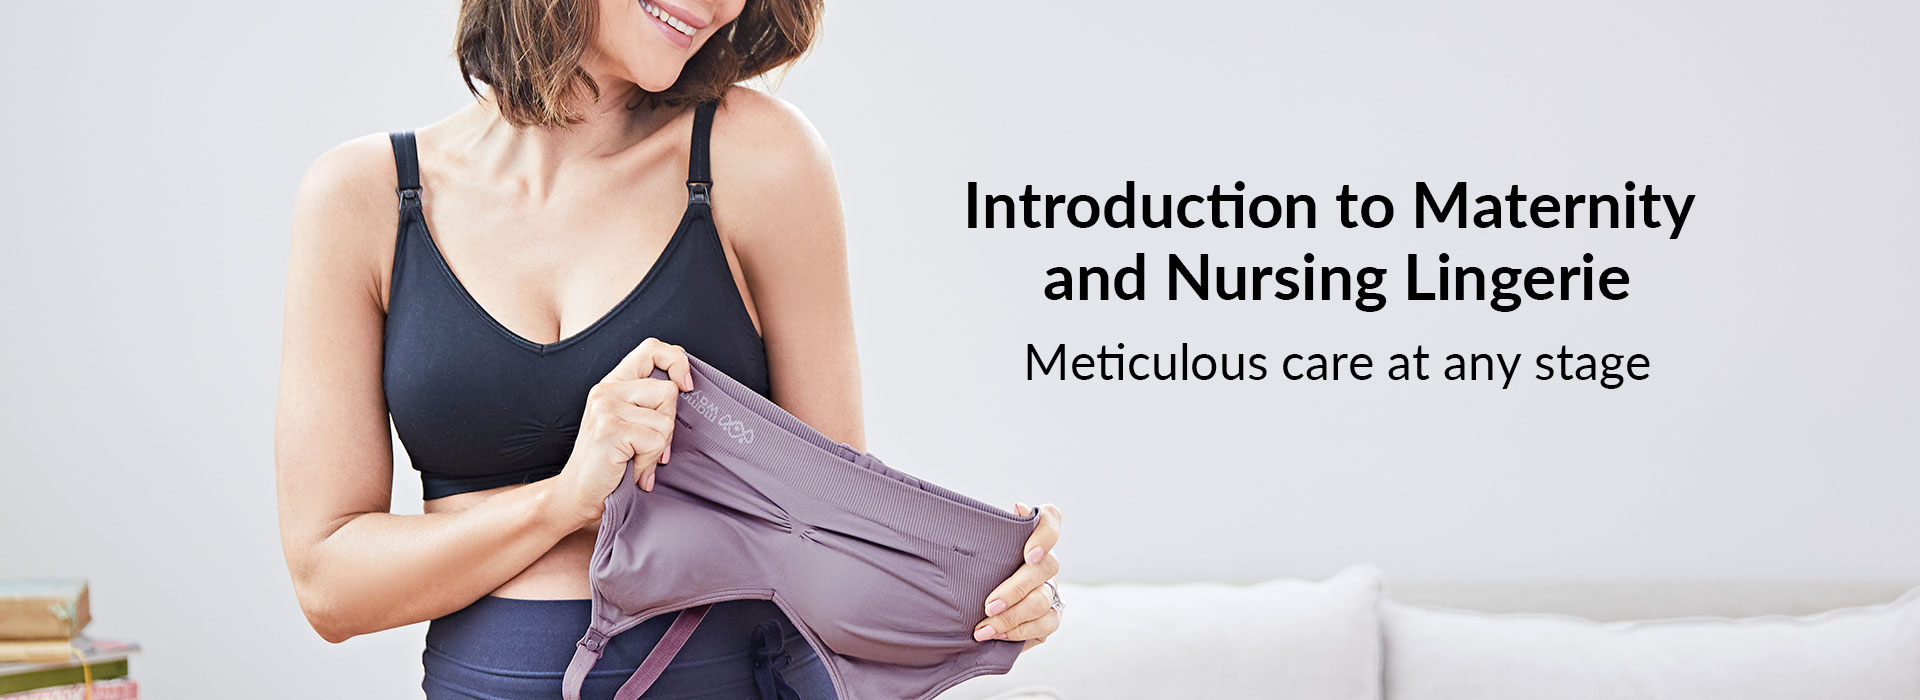 Maternity and nursing lingerie